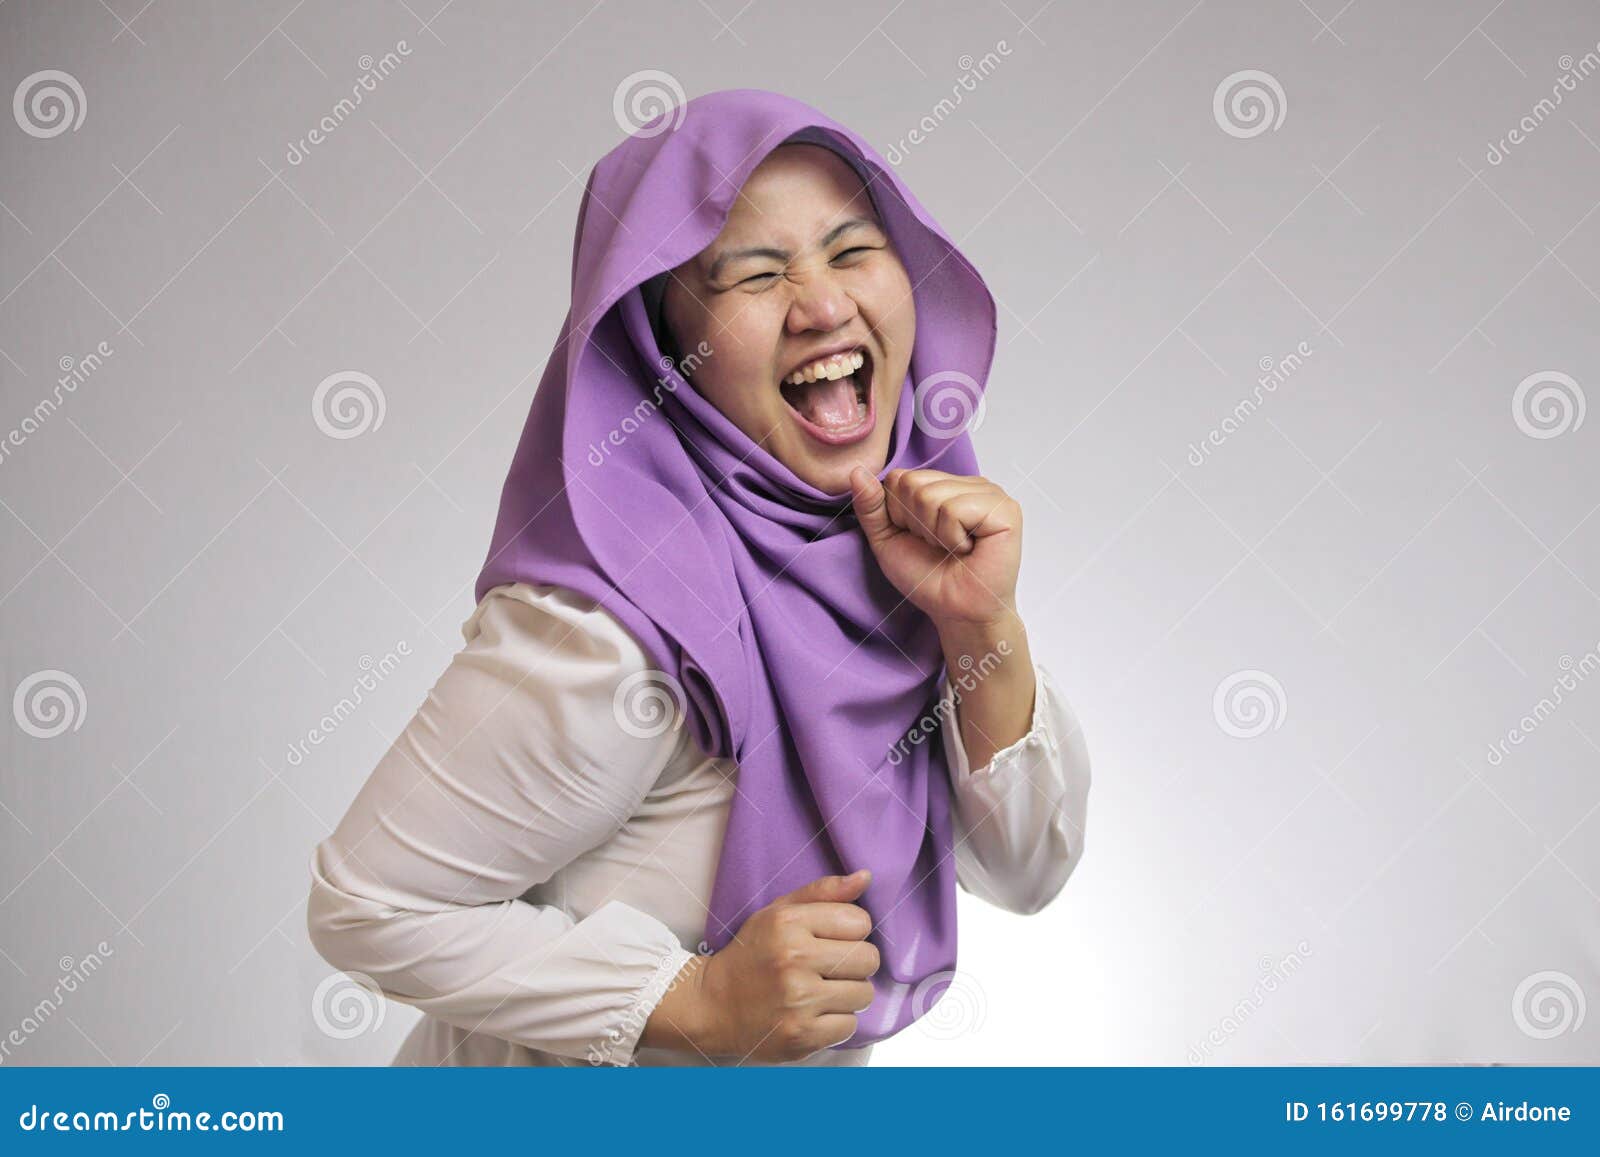 Happy Funny Asian Muslim Woman Dancing Full of Joy Stock Photo - Image of  funny, blue: 161699778